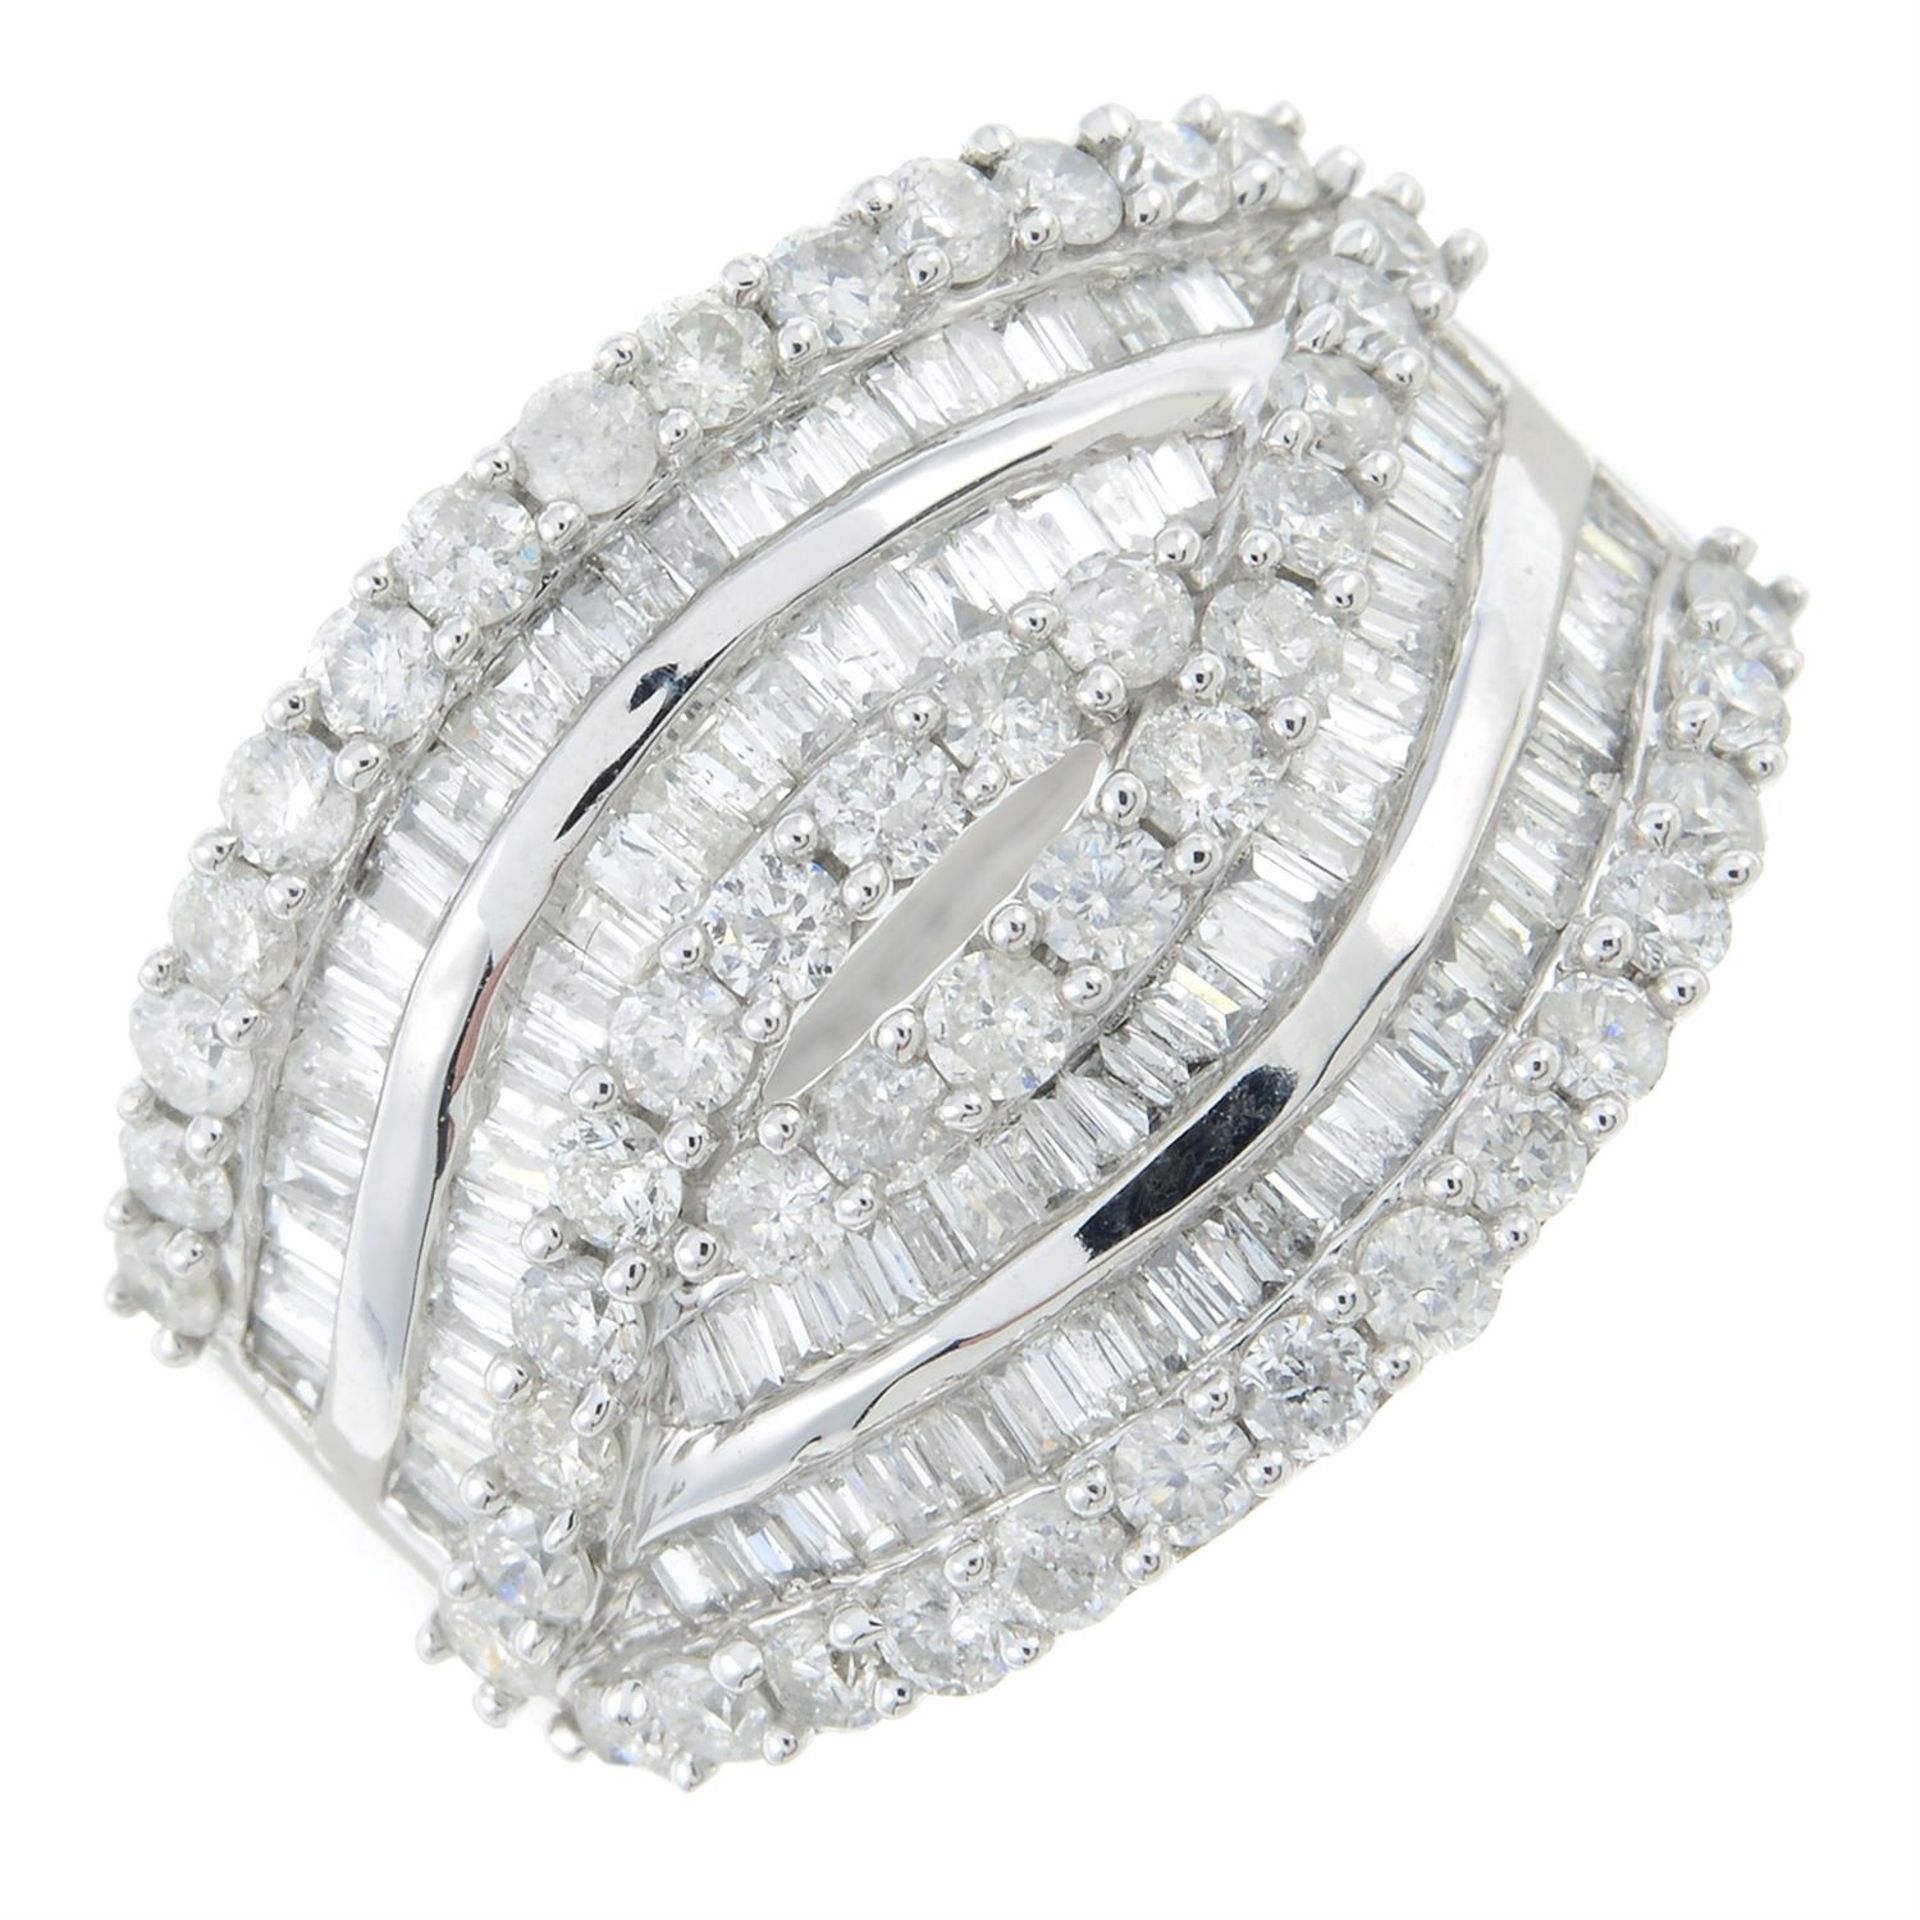 A vari-cut diamond dress ring.